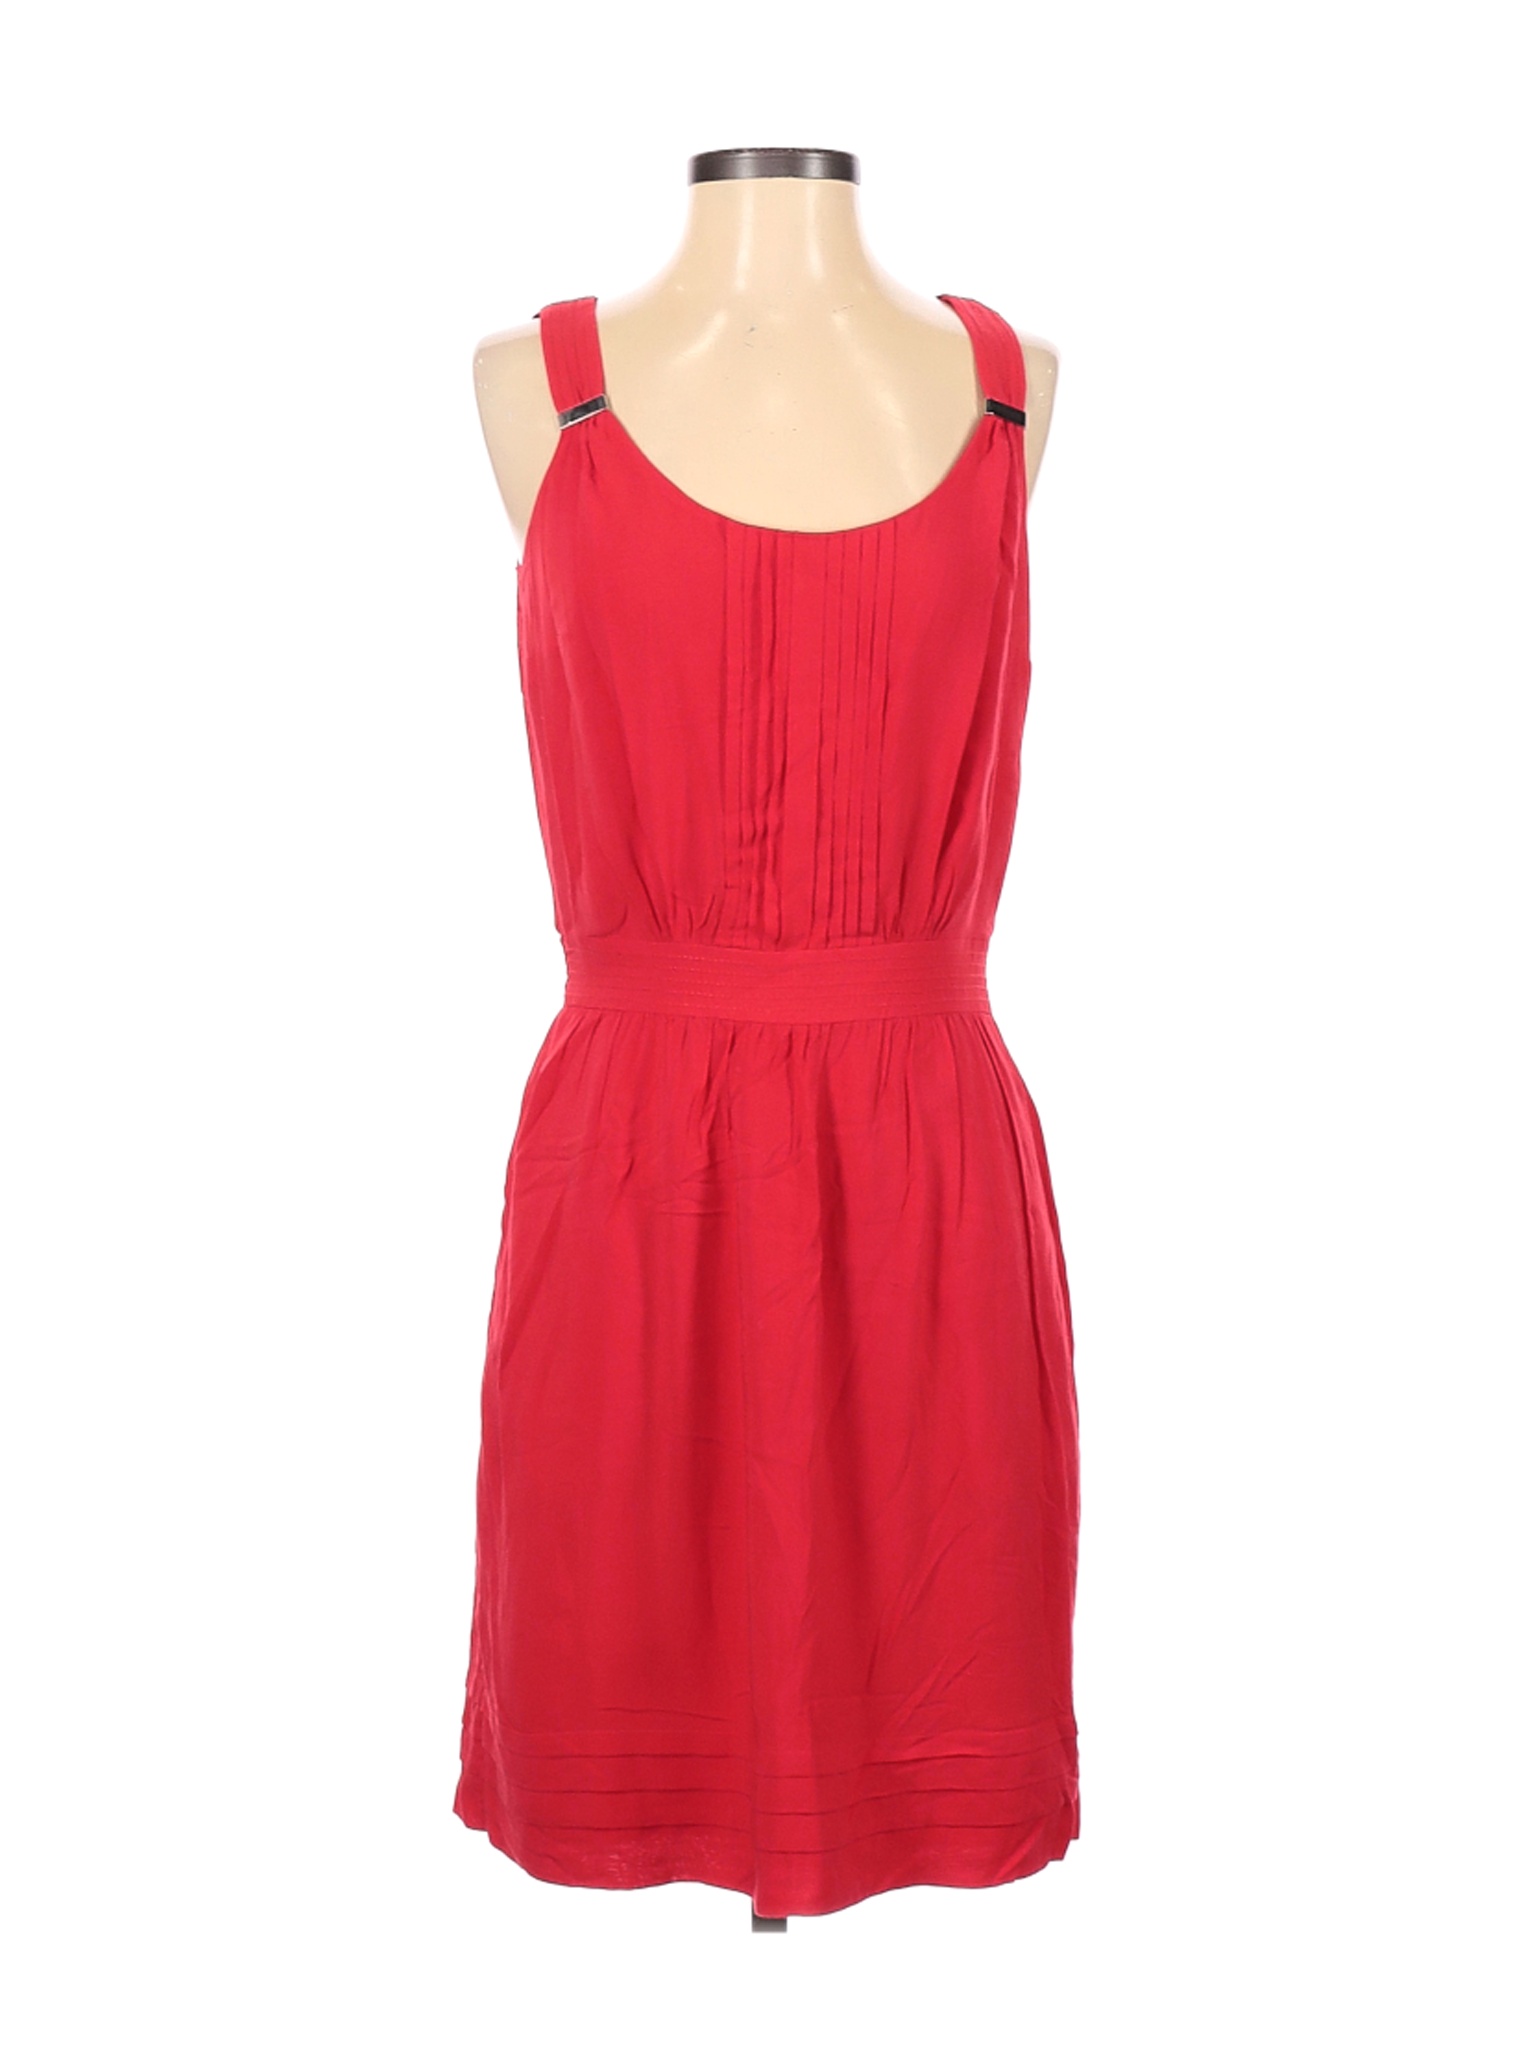 White House Black Market Women Red Casual Dress XS | eBay